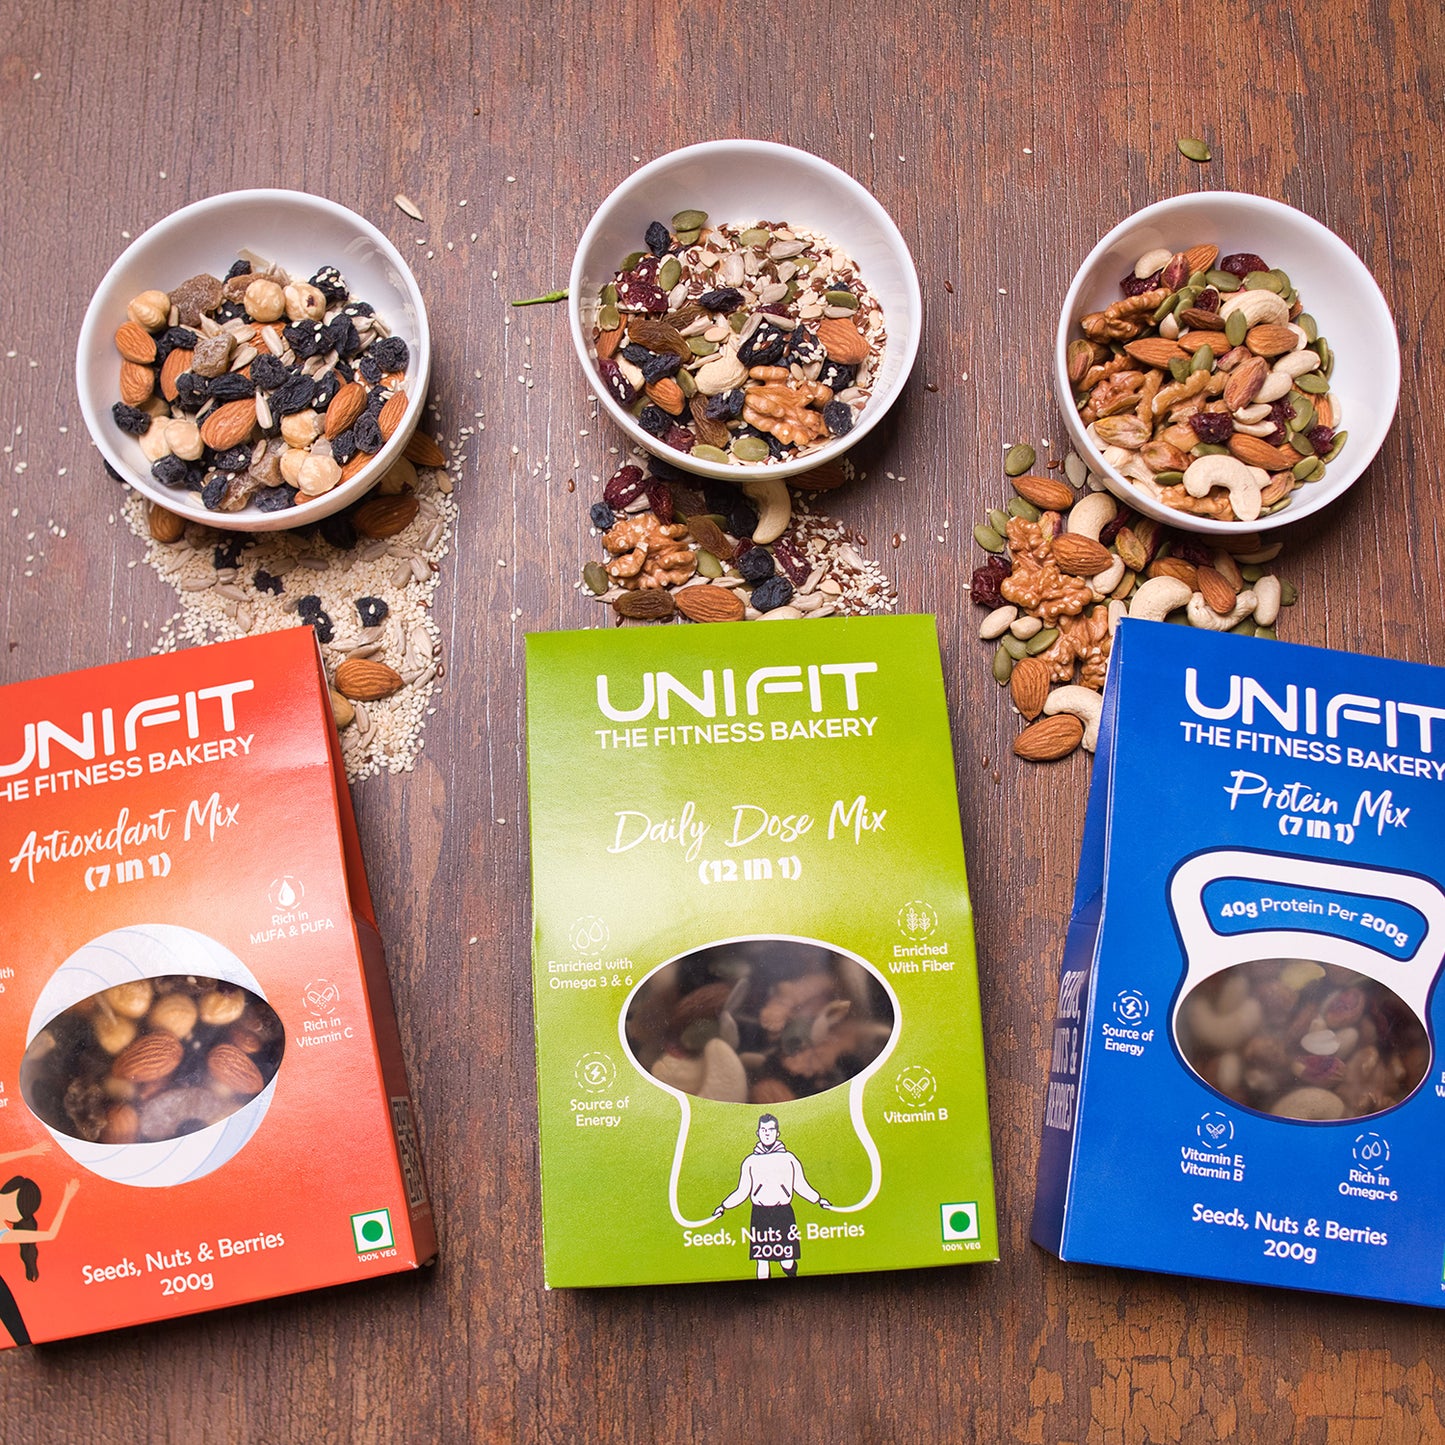 Unifit Healthly Gift Hamper (UNIFIT Diwali Gift Hamper, Mixed Dry Fruits)